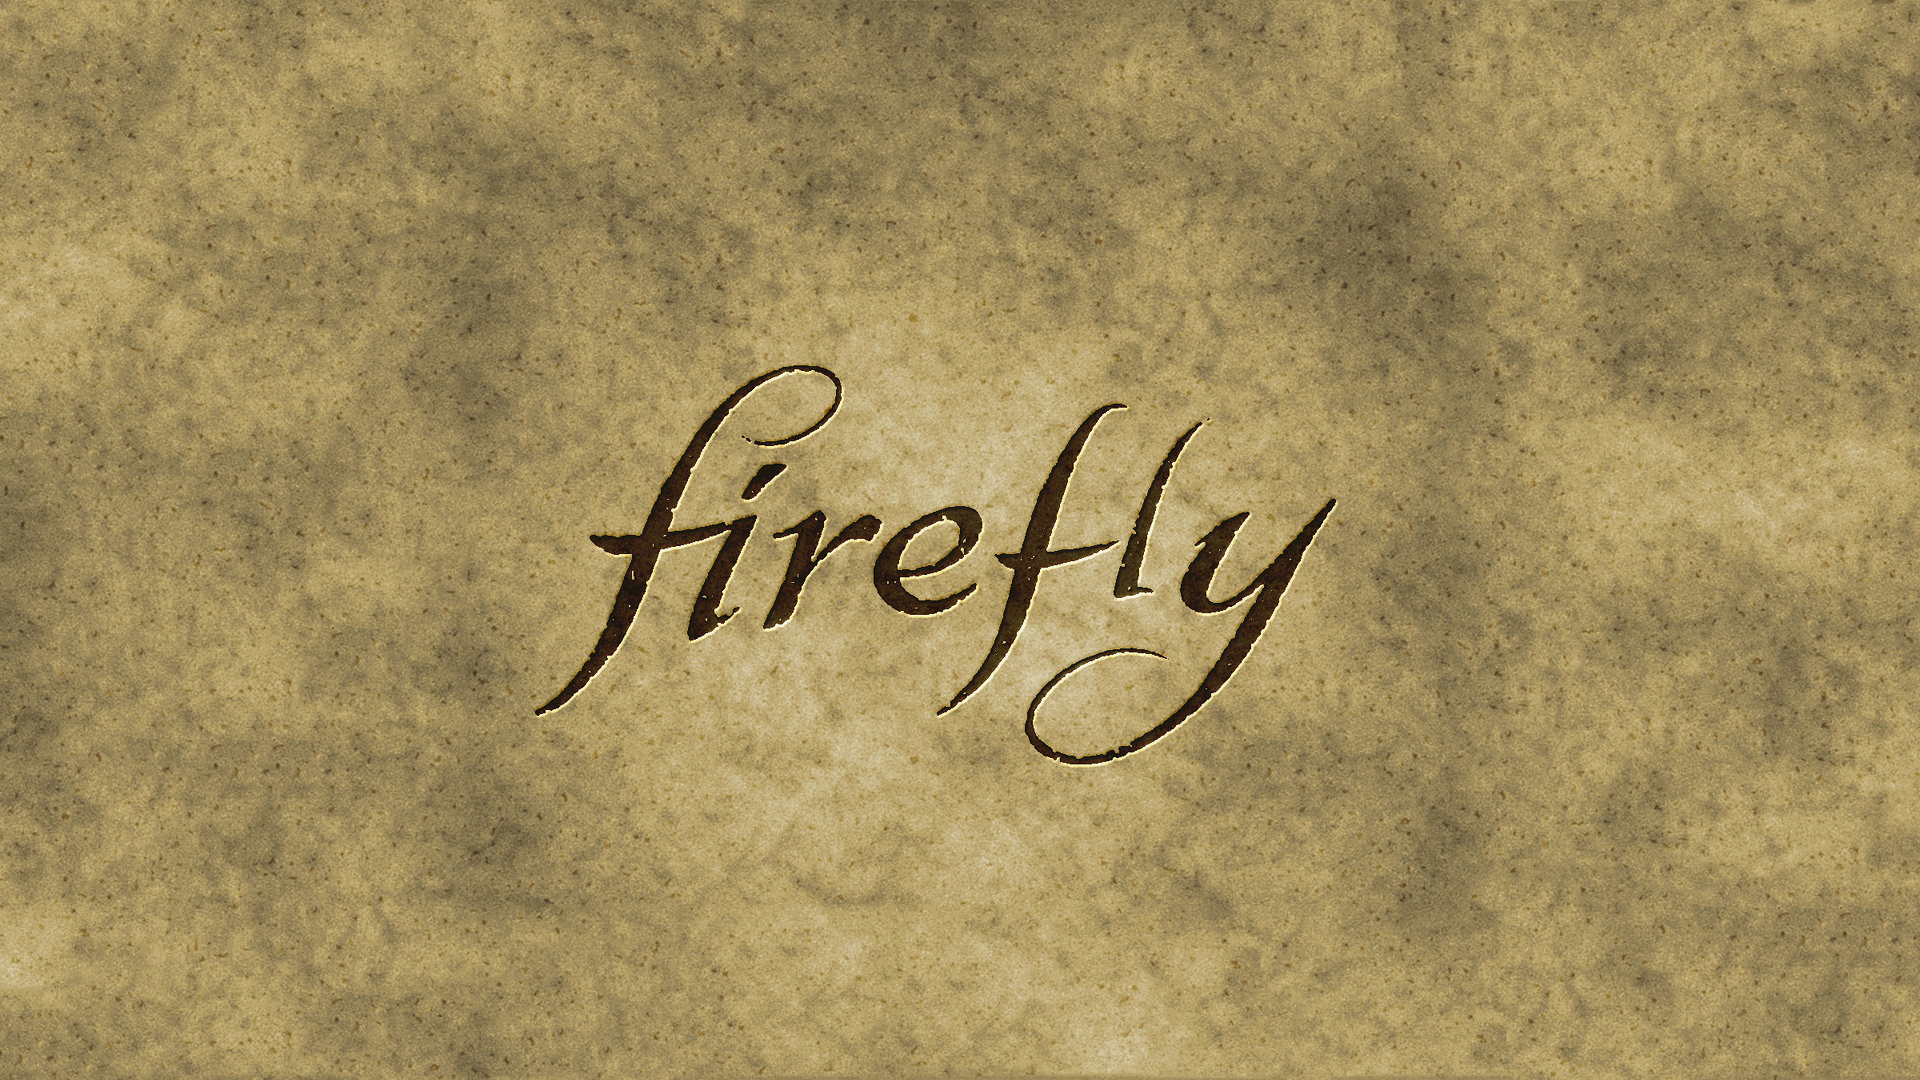 Firefly Serenity Spaceship Starlight Sunlight wallpaper  1920x1080   122759  WallpaperUP